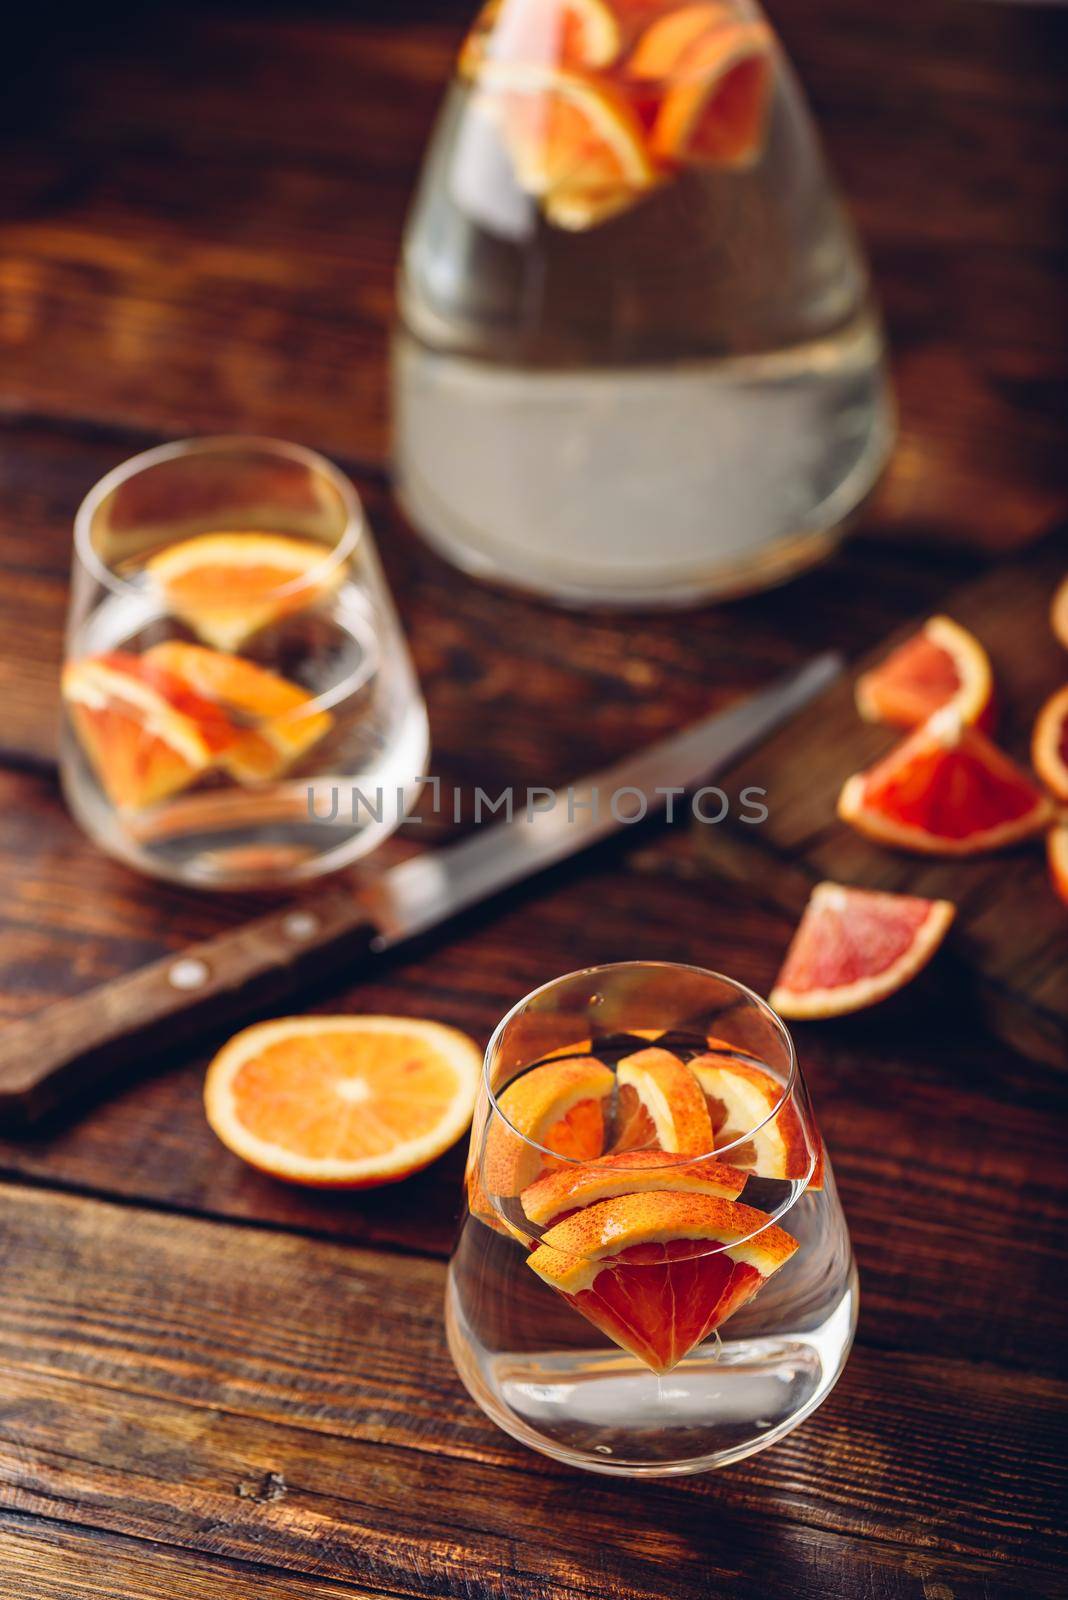 Detox water with blood oranges by Seva_blsv